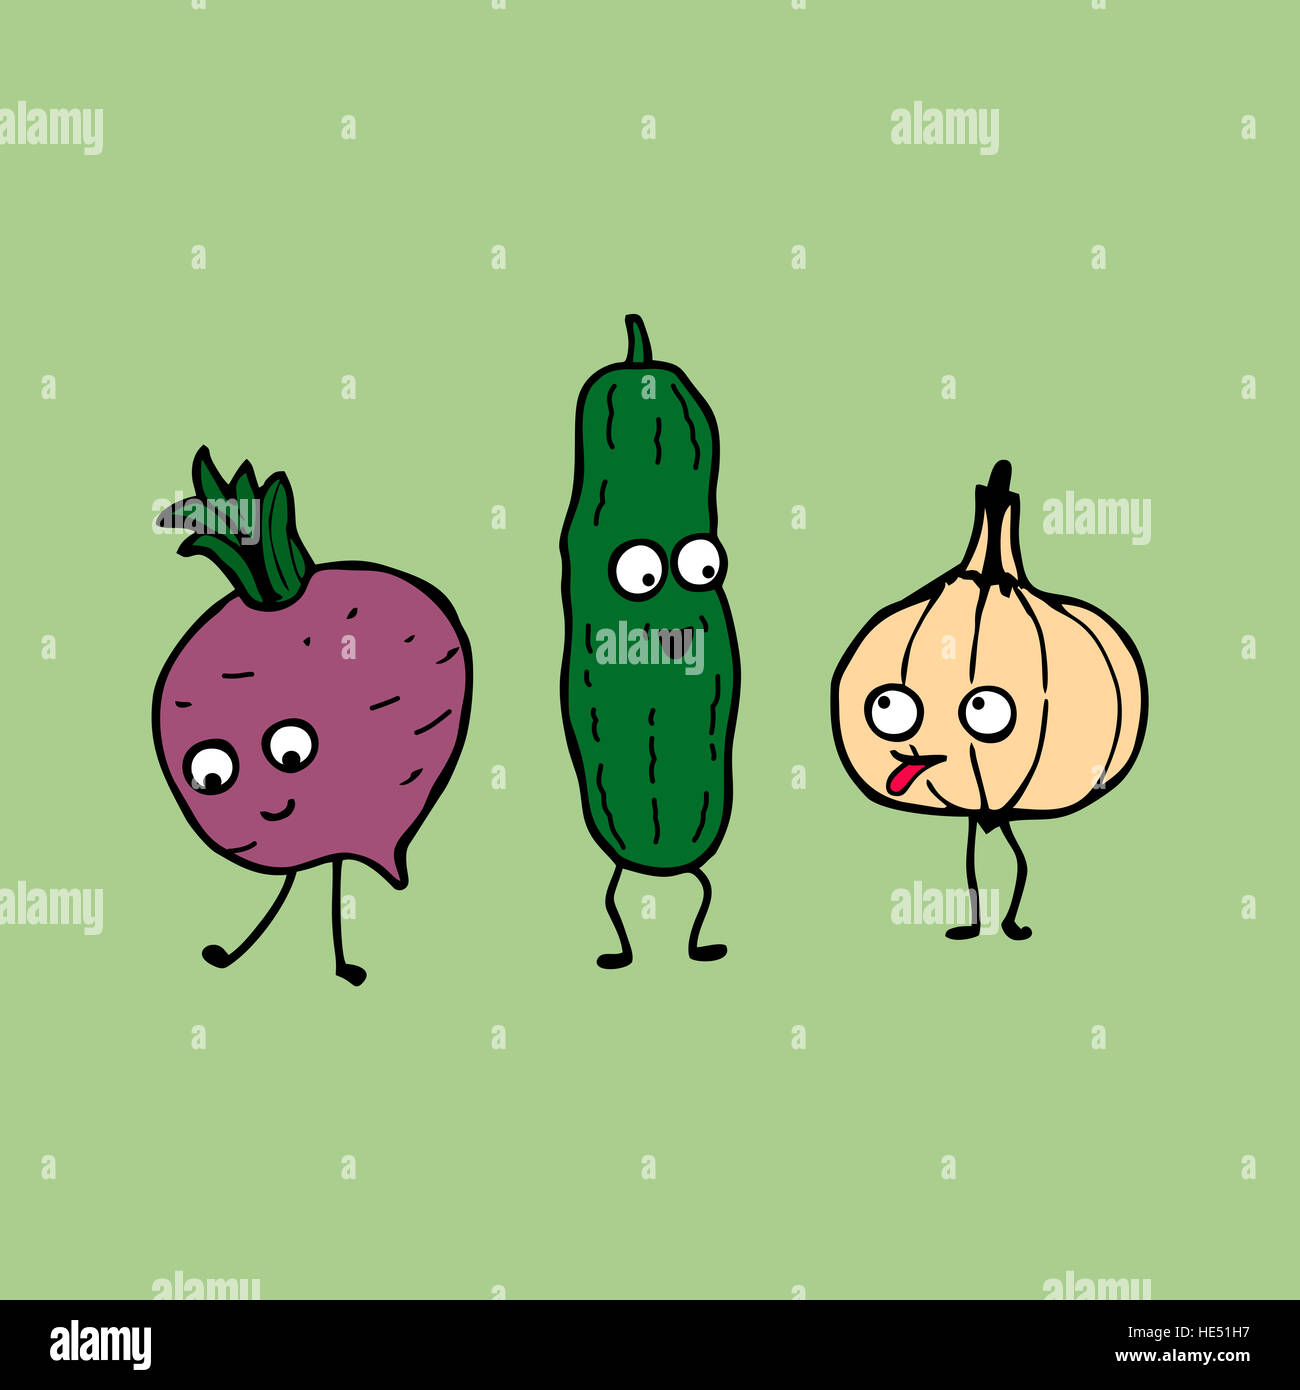 Cartoon vegetables: cucumber, radish and garlic Stock Photo